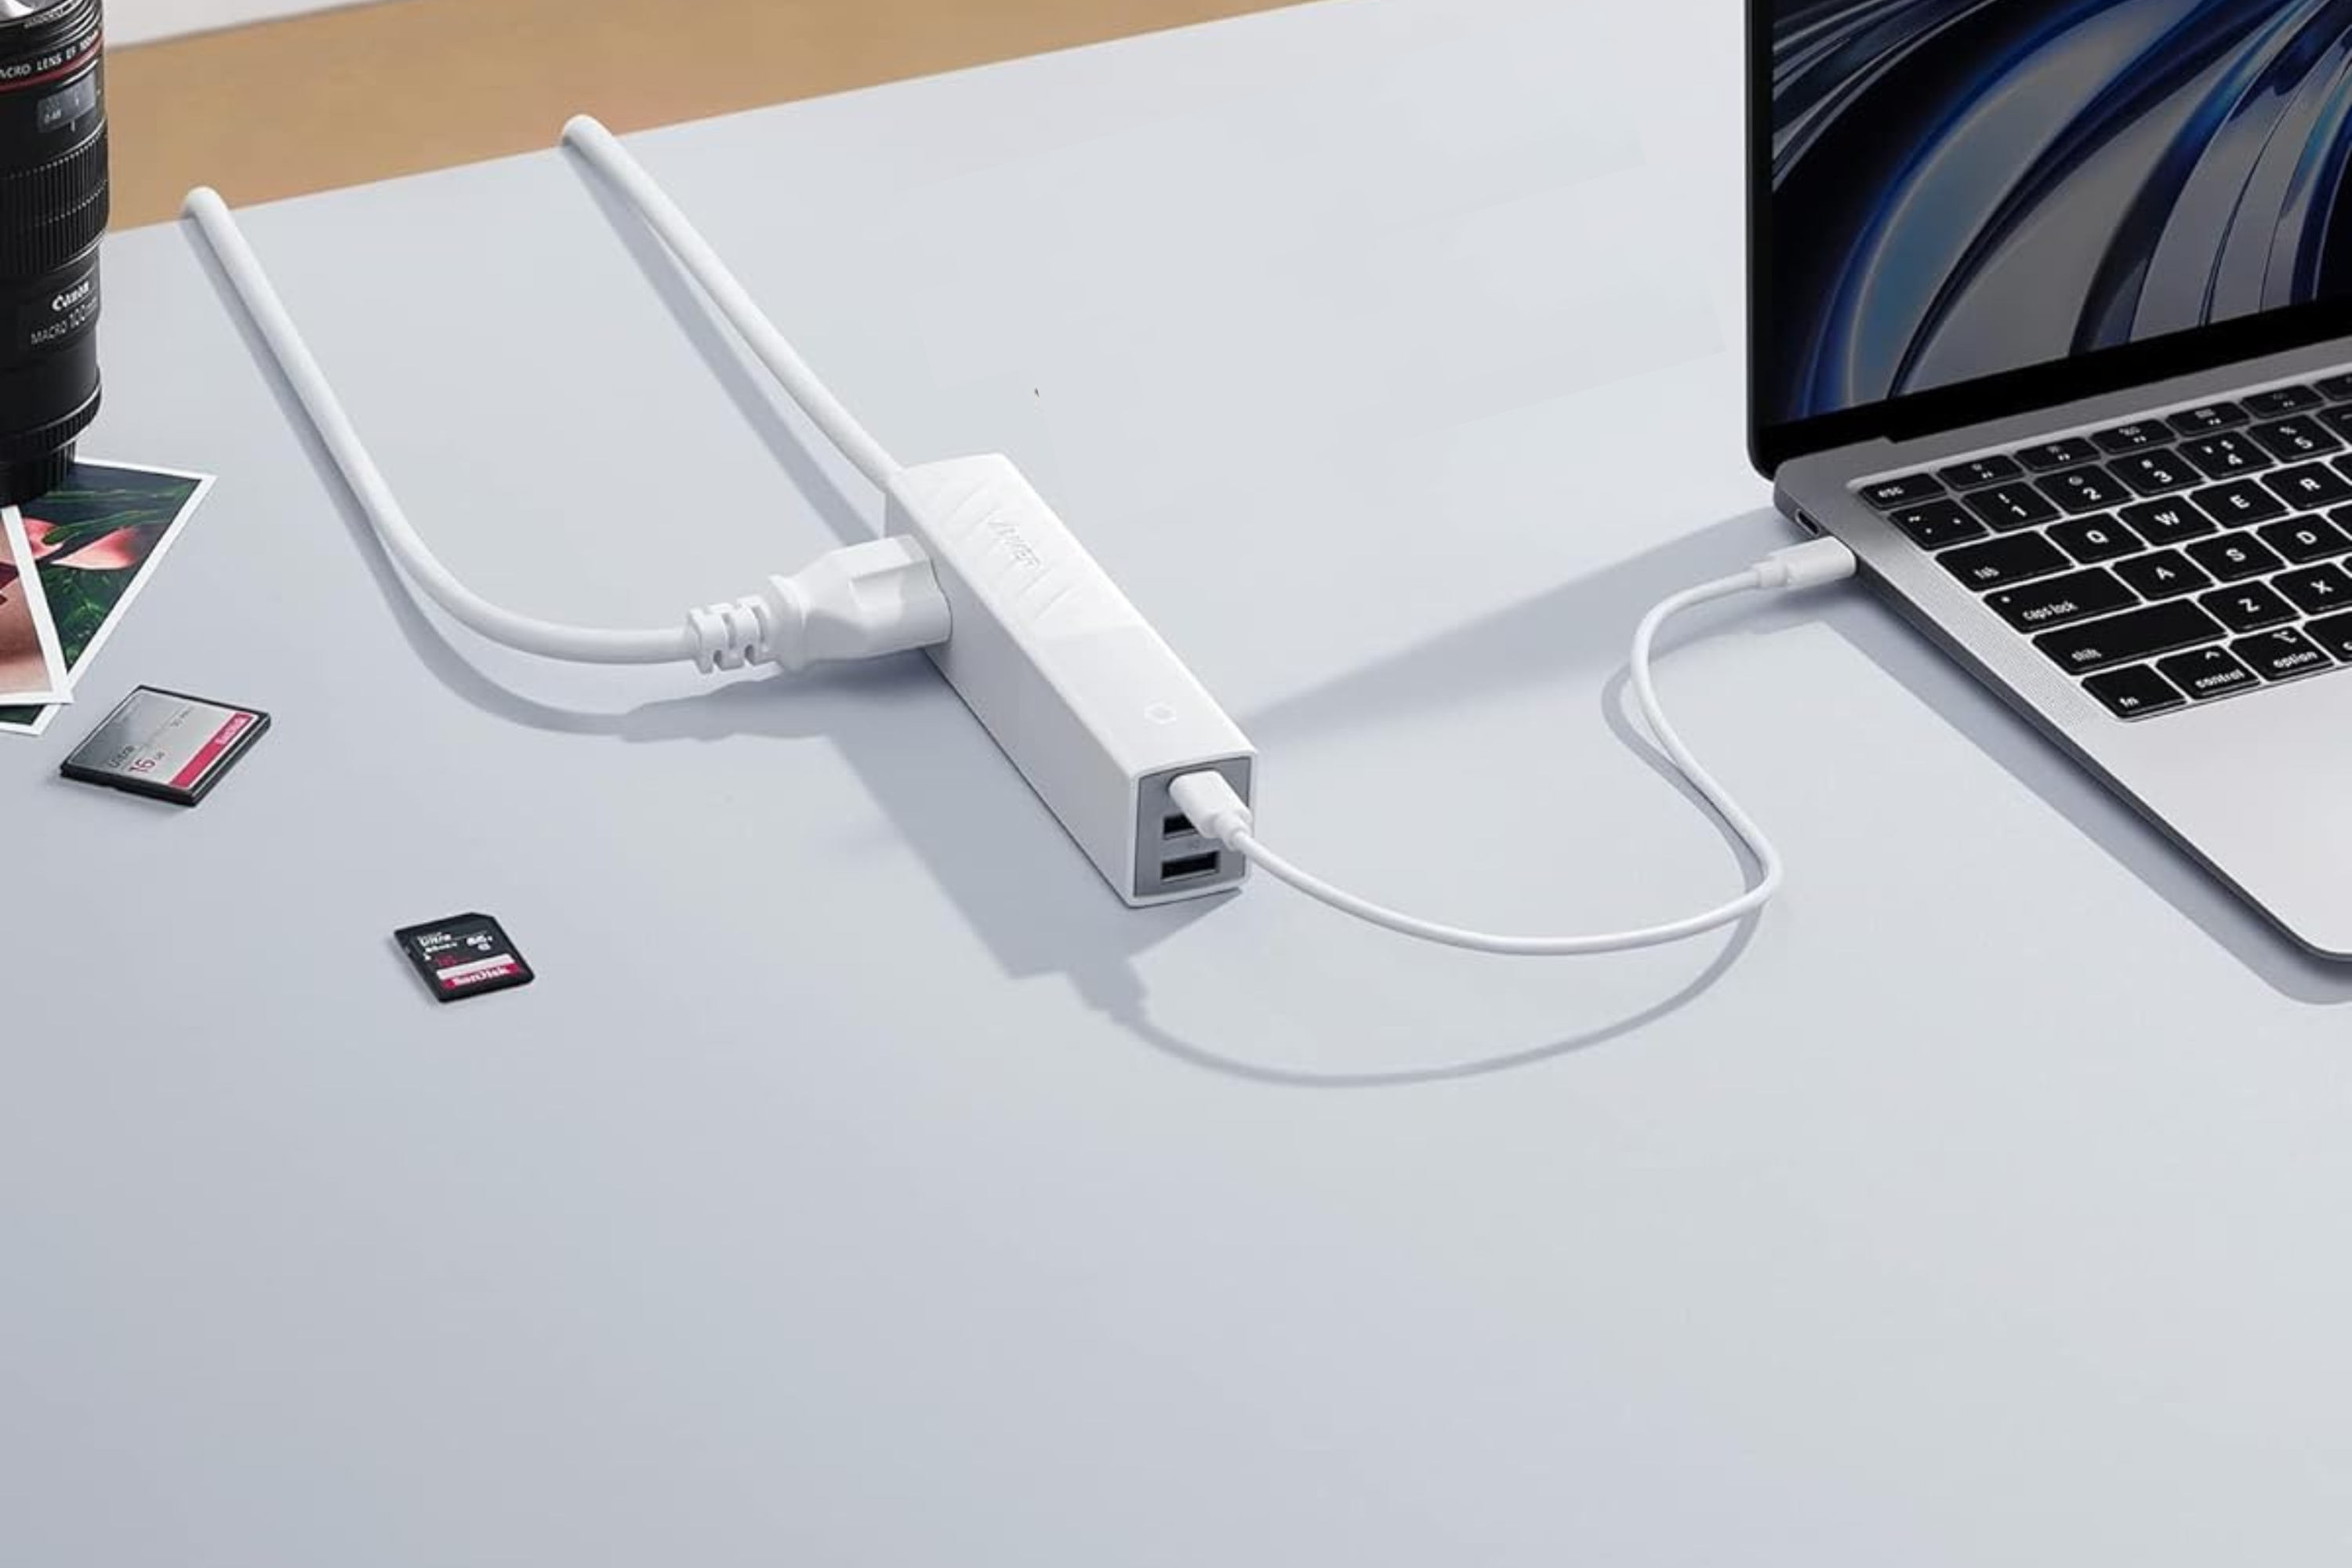 Anker 511 USB Power Strip charging laptop 